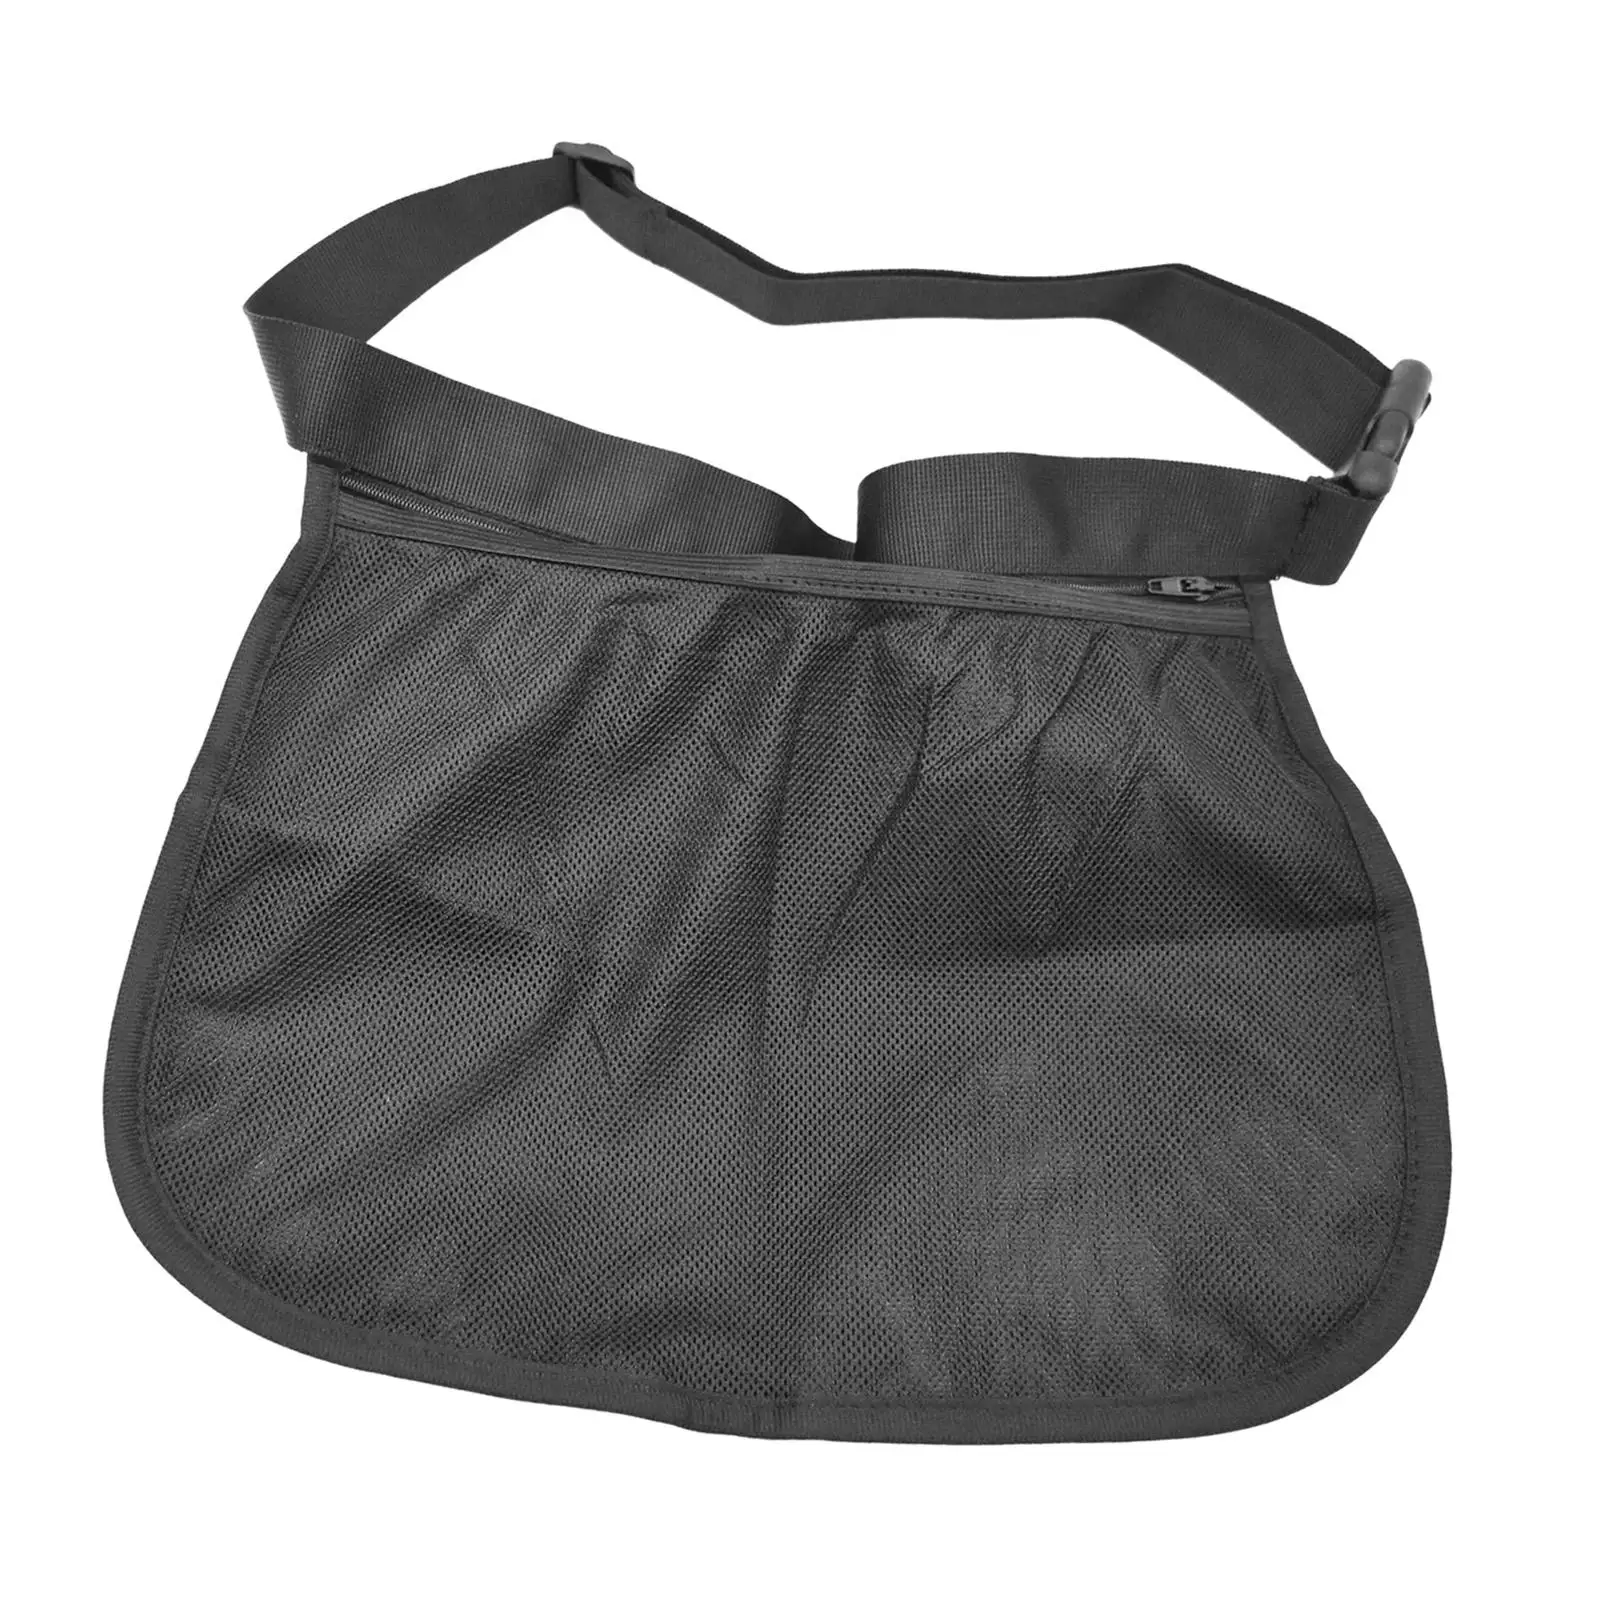 Black Tennis Ball Holder Waist Hip Bag Carrying Bag Holding 8 Tennis Balls Table Tennis Ball Holder Bag Tennis Ball Storage Bag